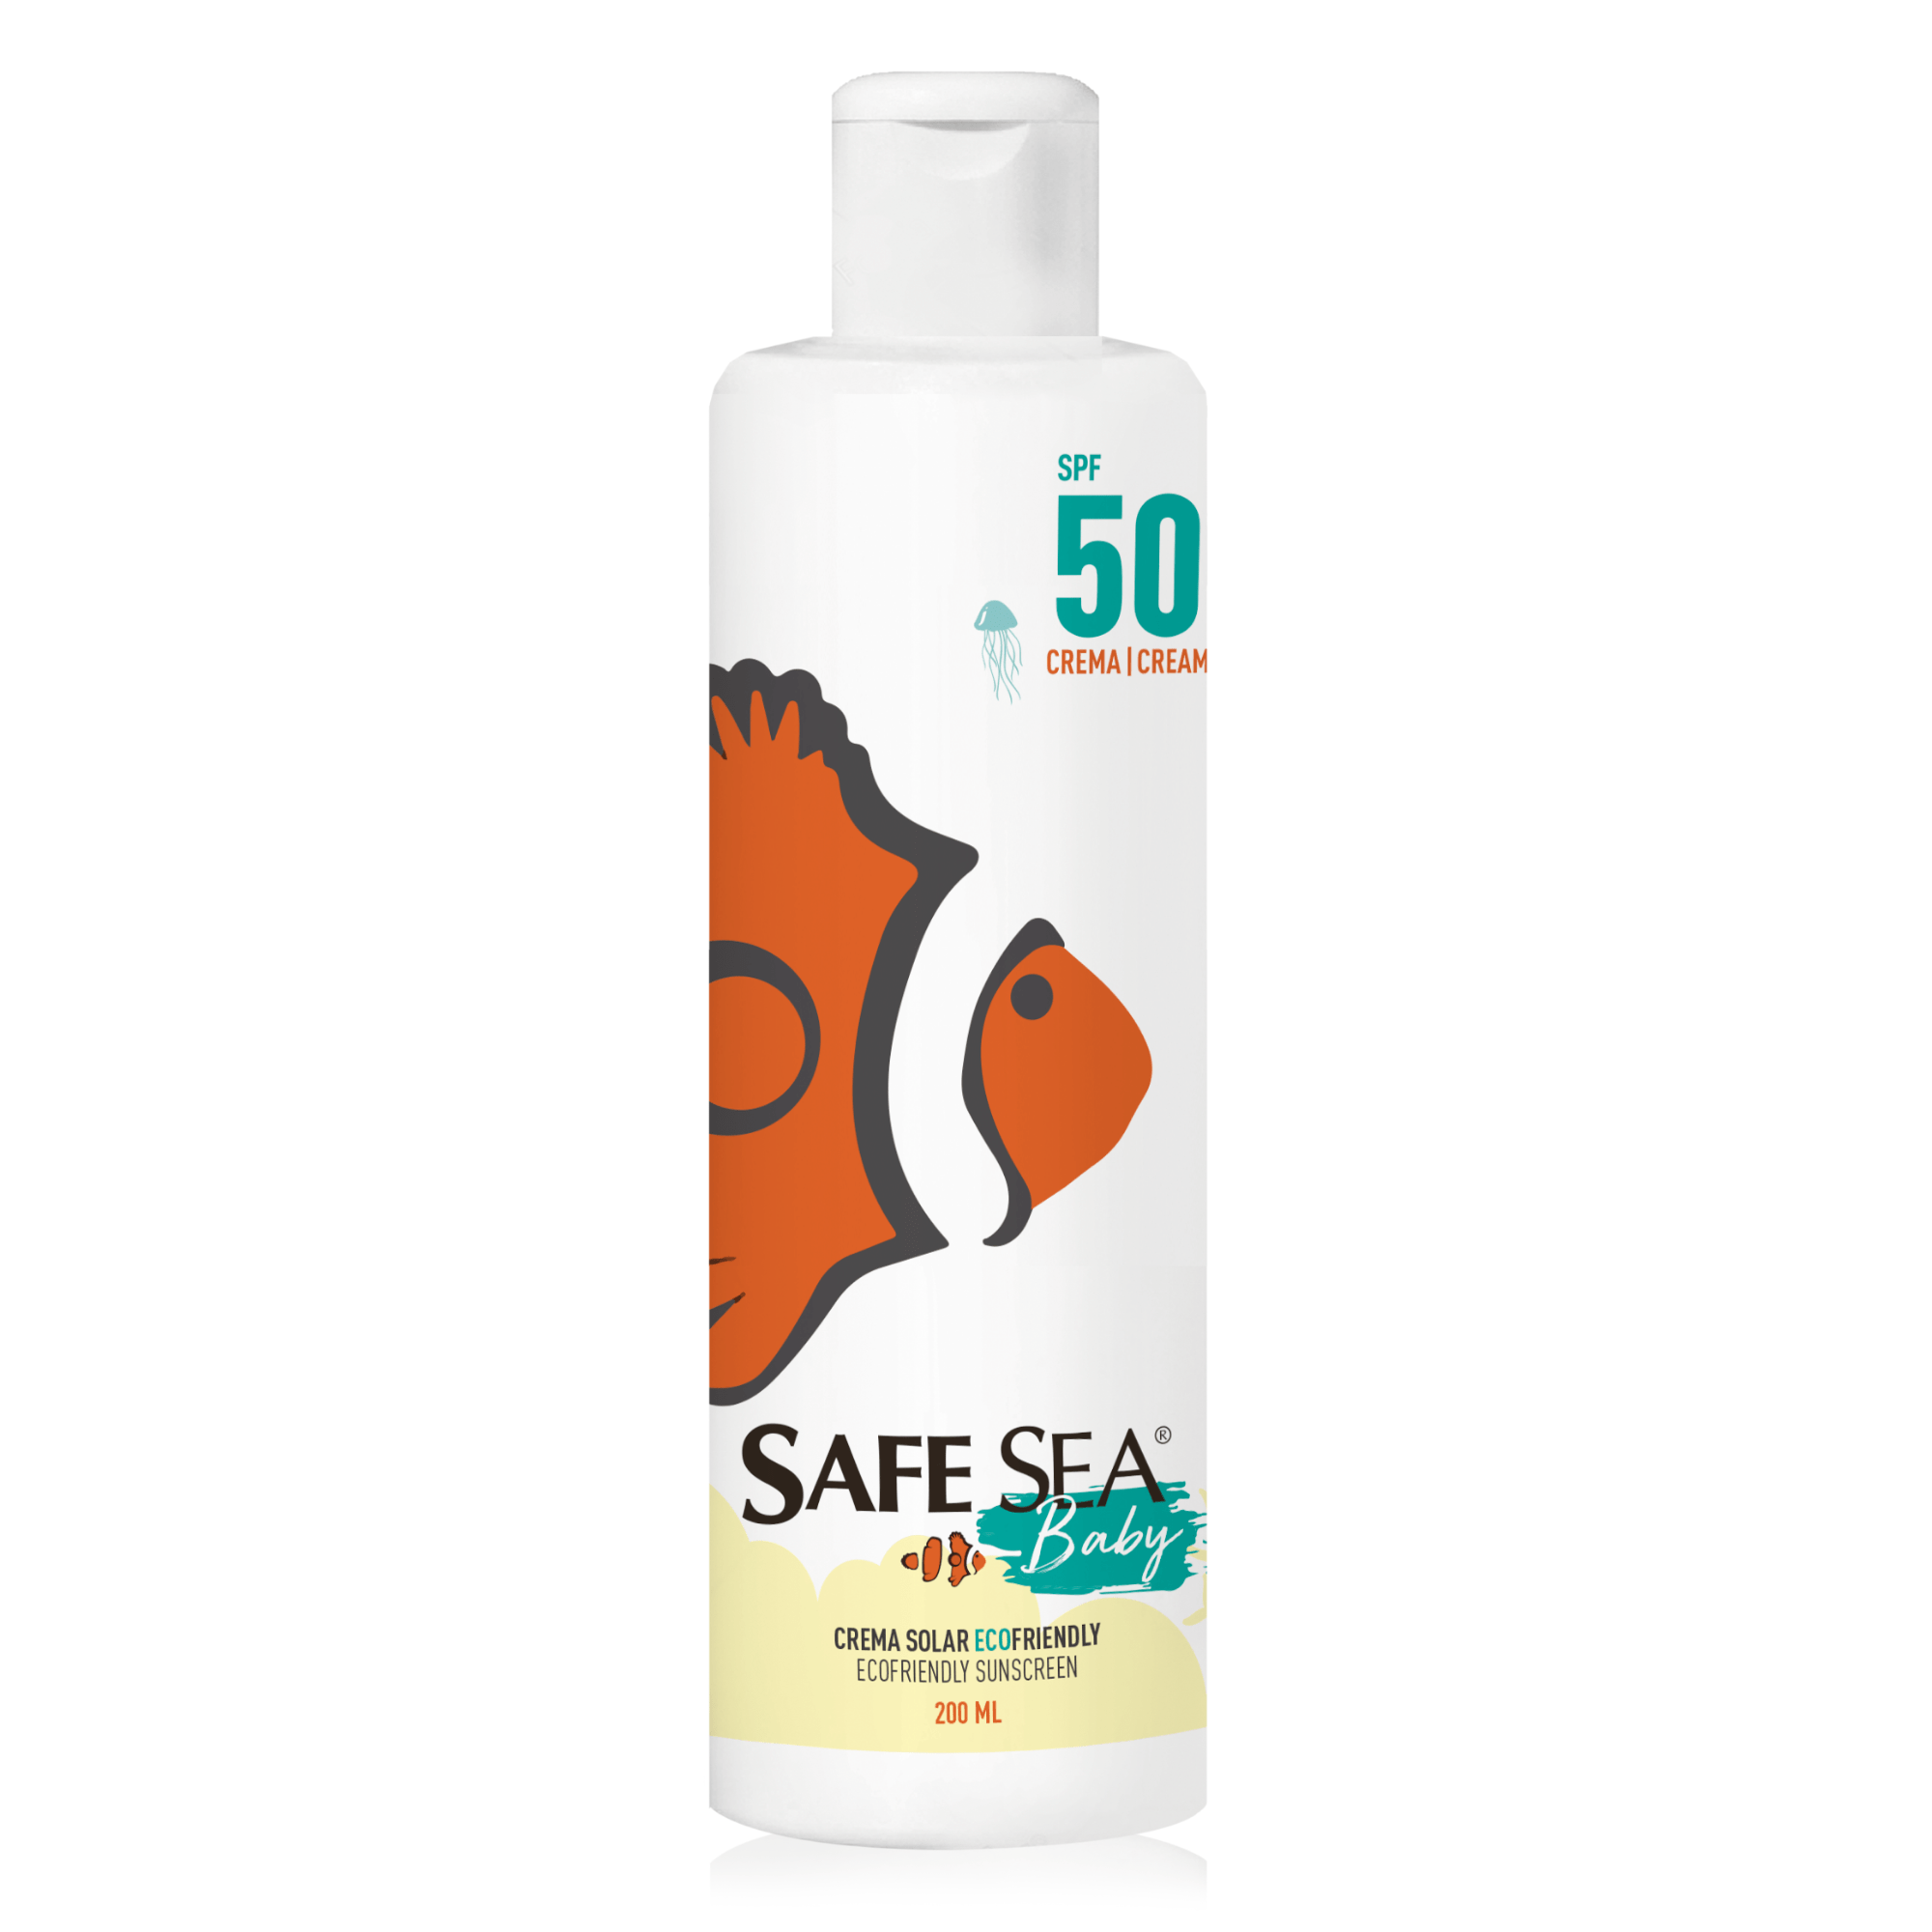 SAFE SEA CREMA SPF50 BABY 200ML 1